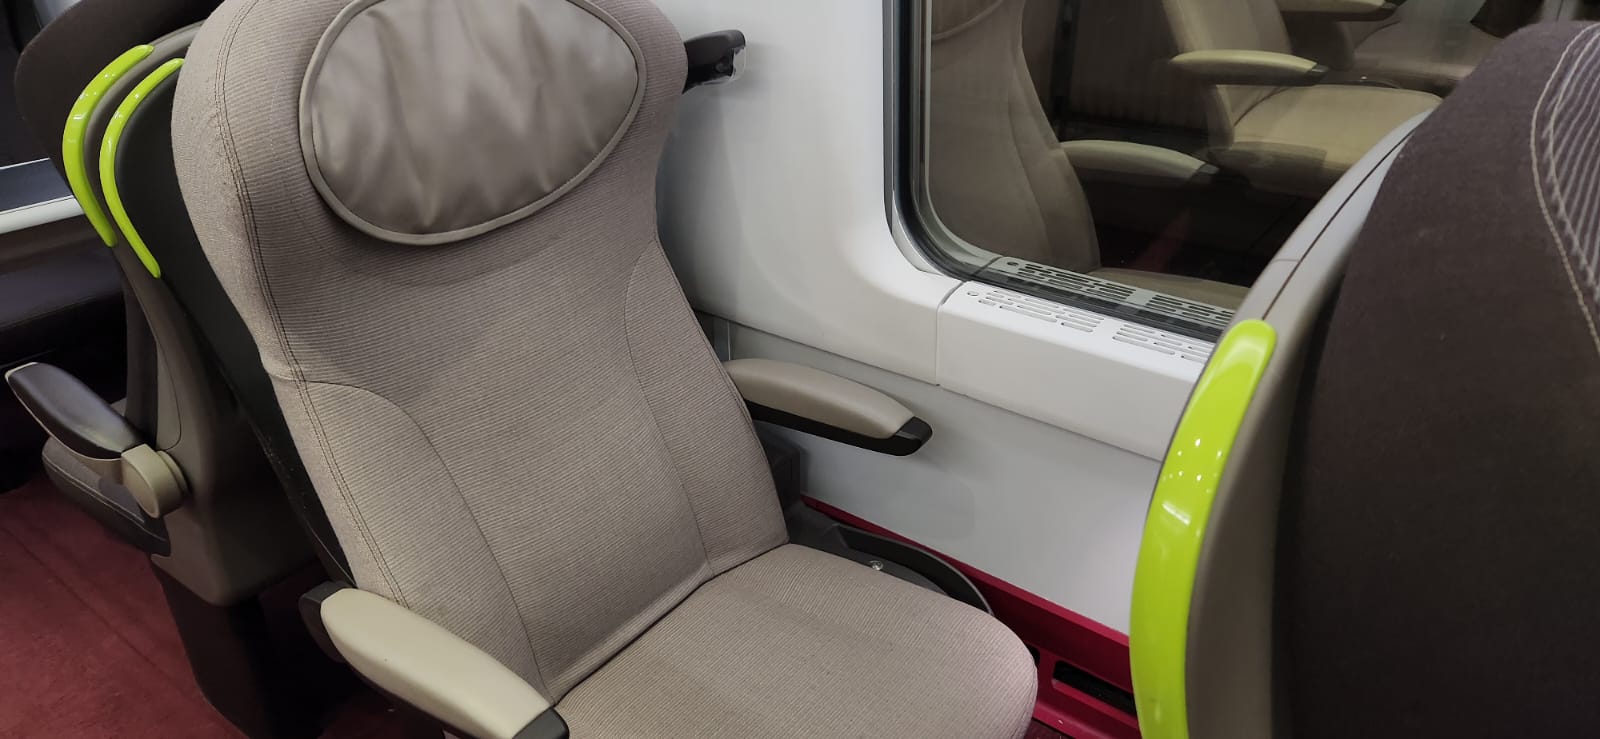 A solo seat in a Eurostar Standard Premier class car